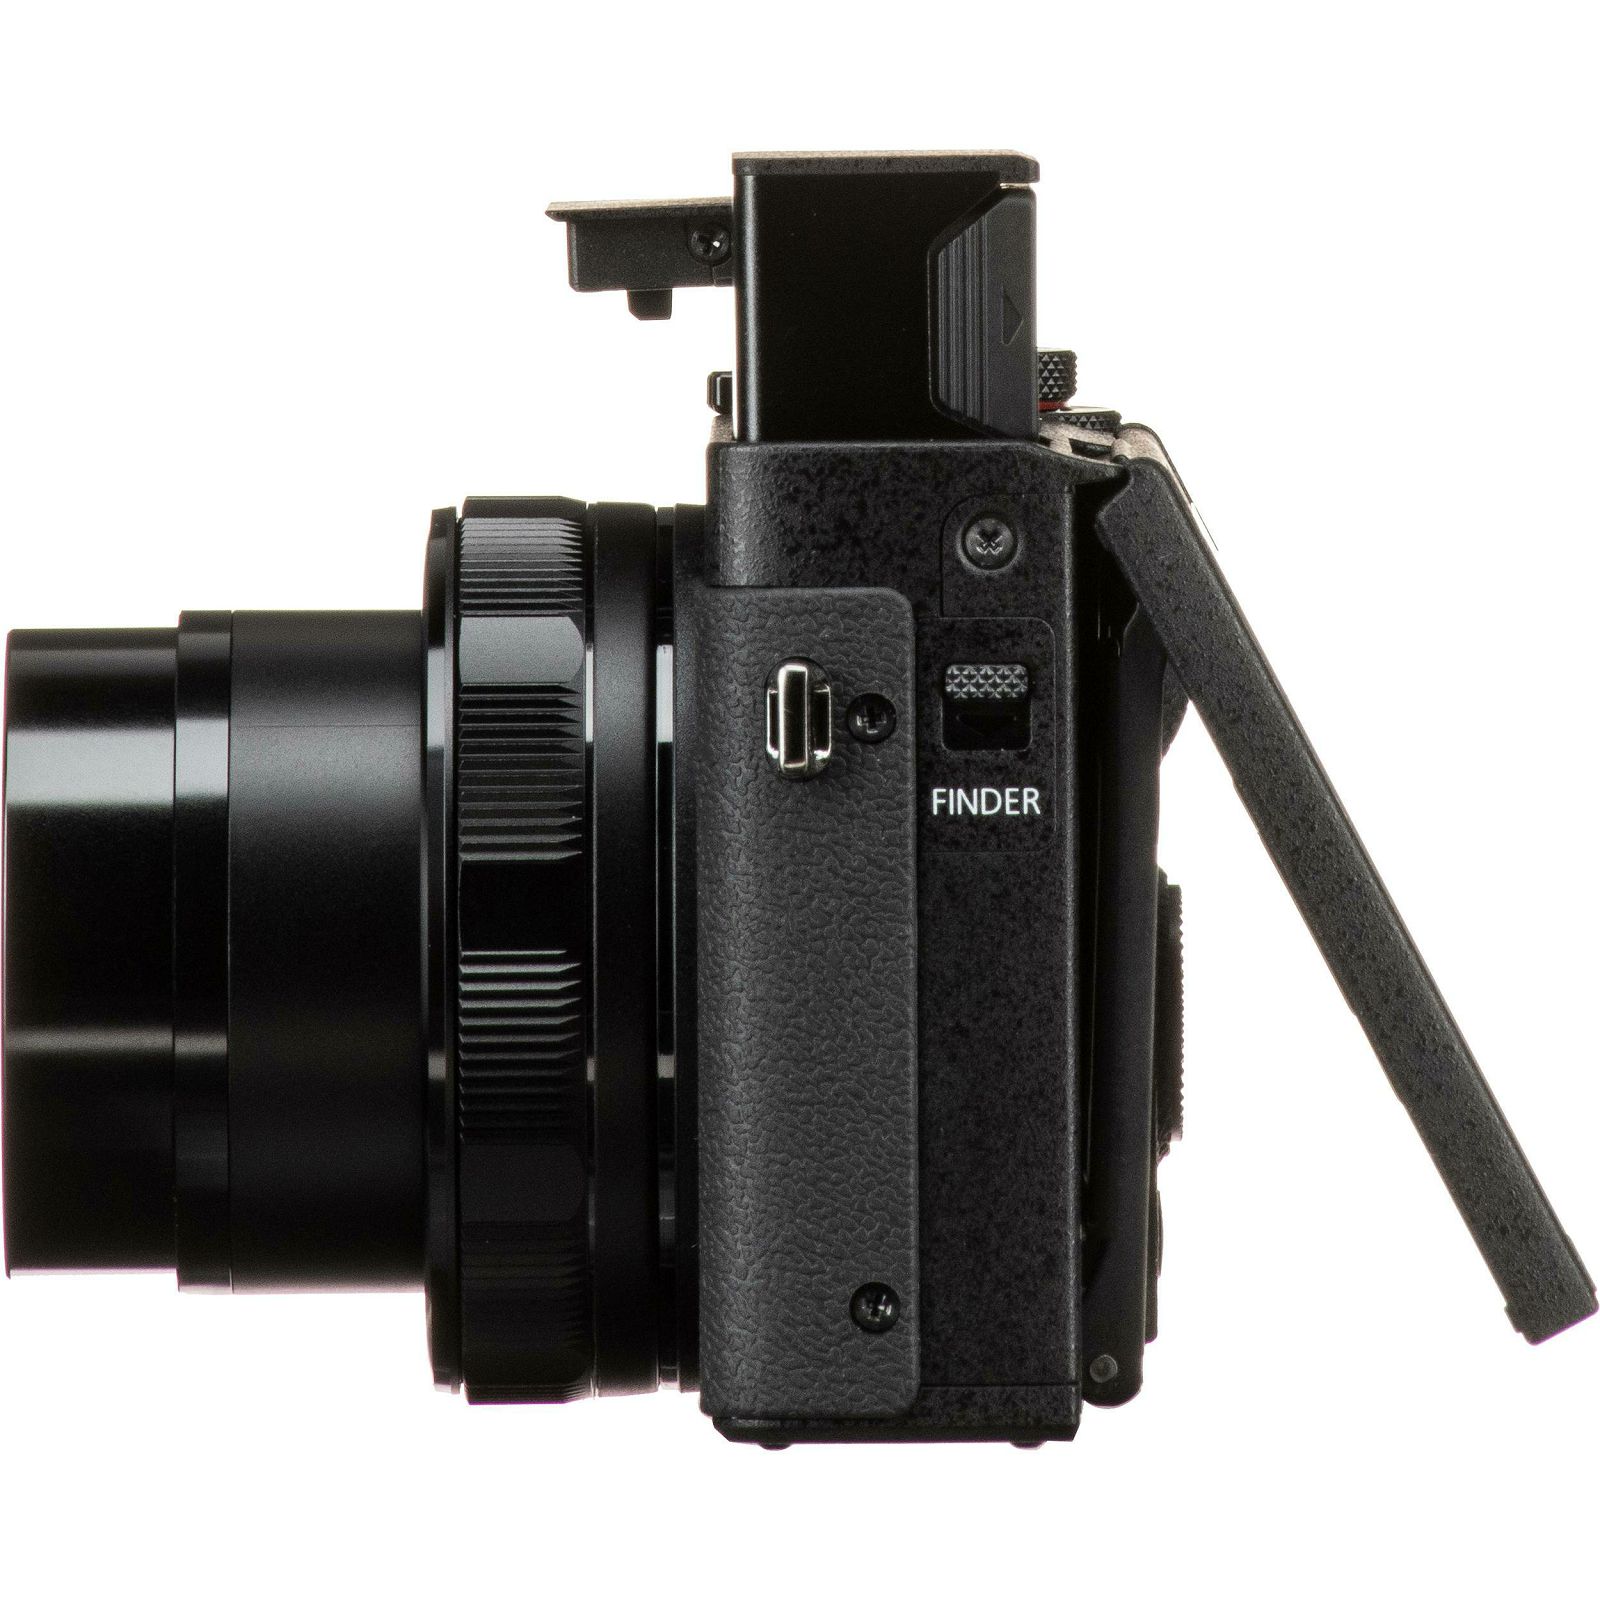 Canon PowerShot G5X II Battery KIT kompaktni digitalni fotoaparat G5X G5 X Mark MK2 (3070C016AA)